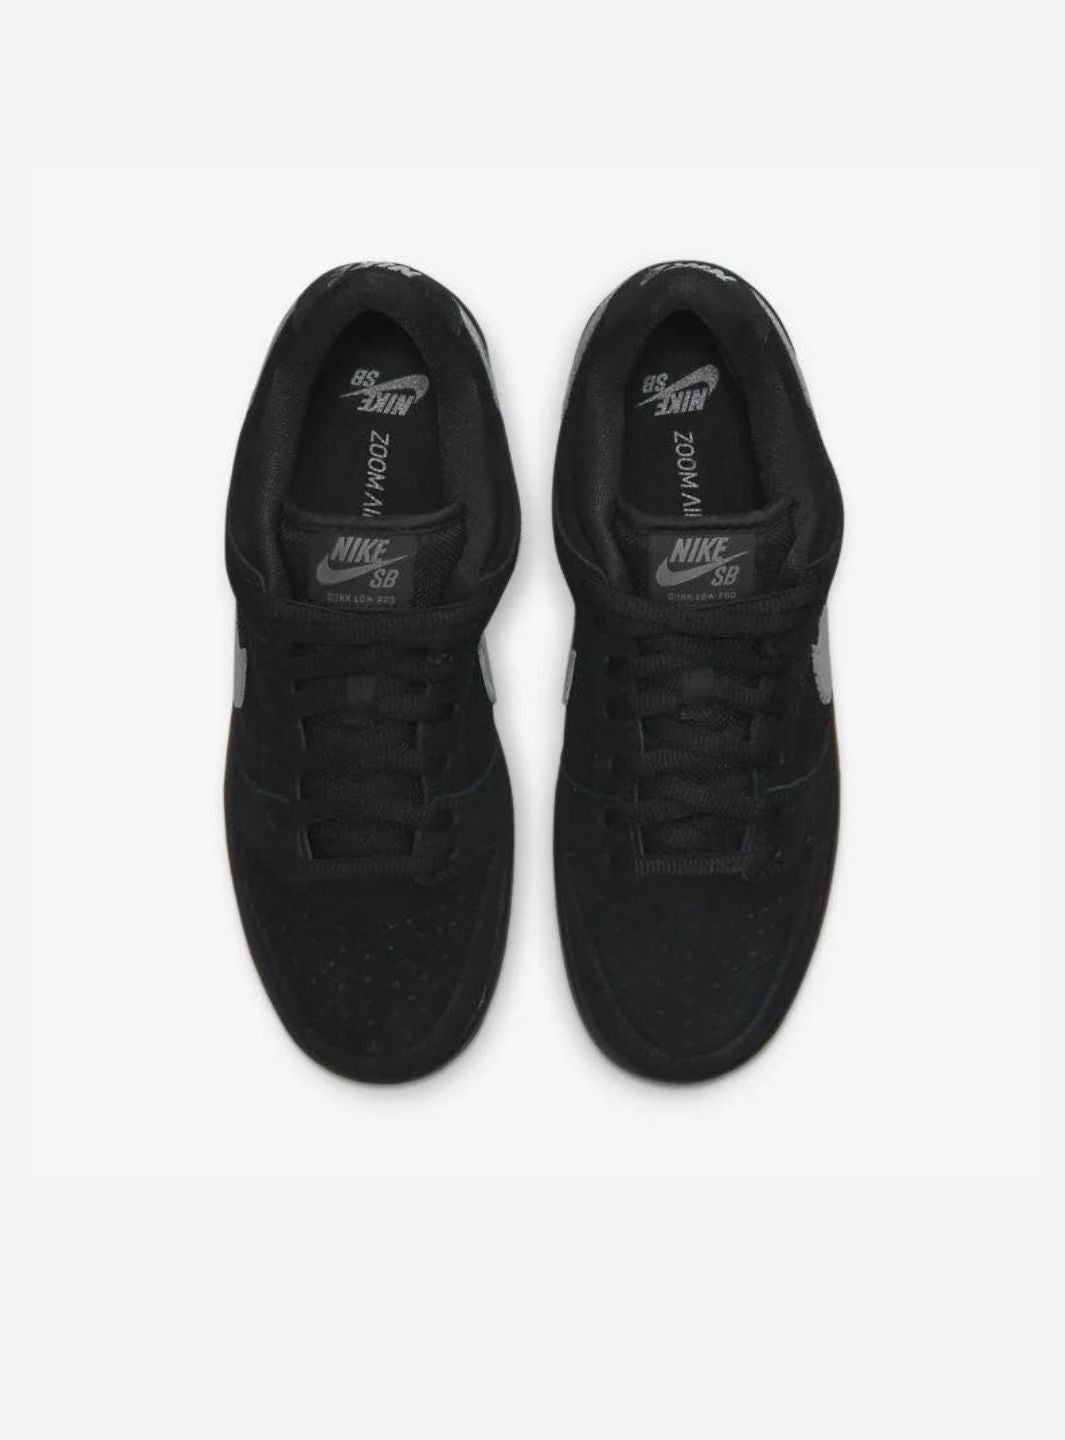 Nike SB Dunk Low Black